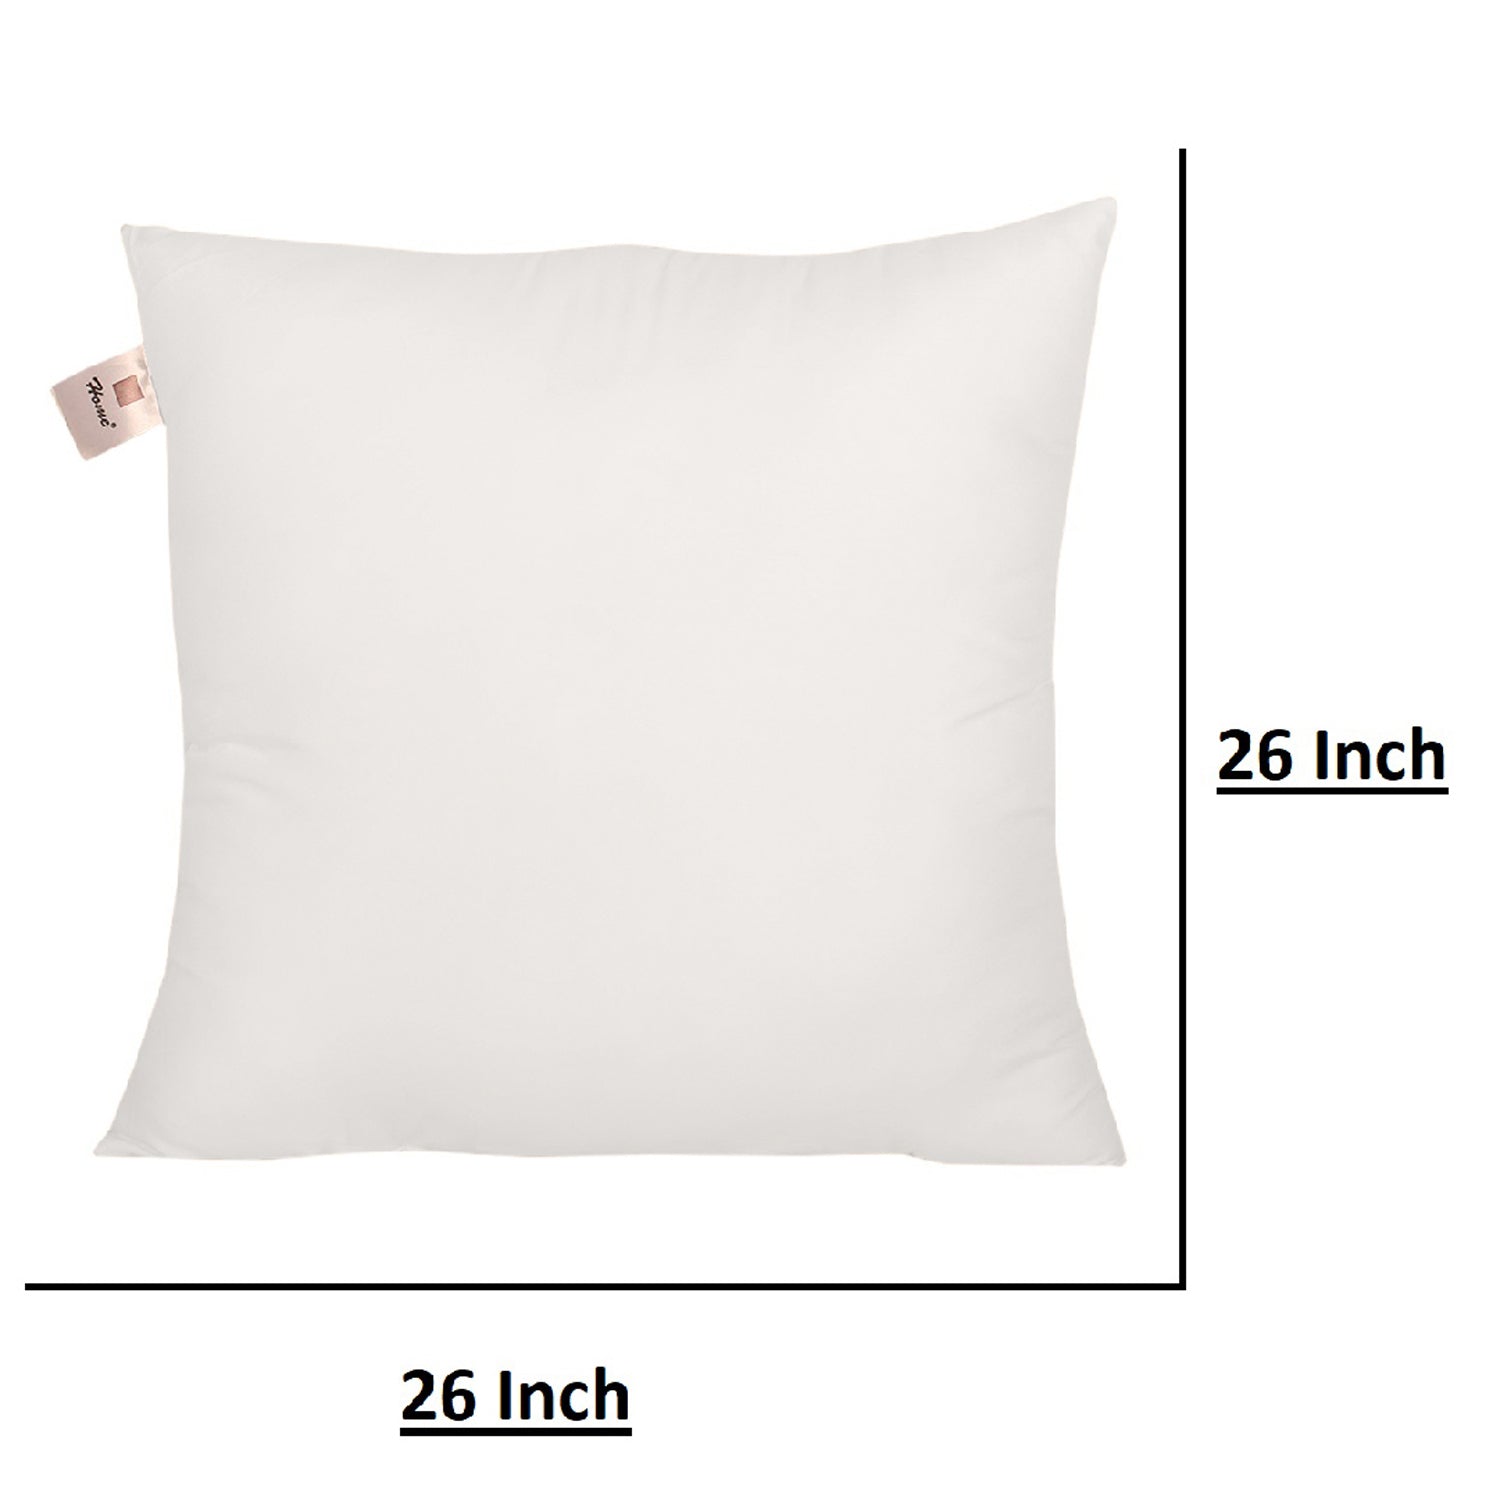 Micro Fiber Cushion Insert Extra Soft | 26x26 Inch